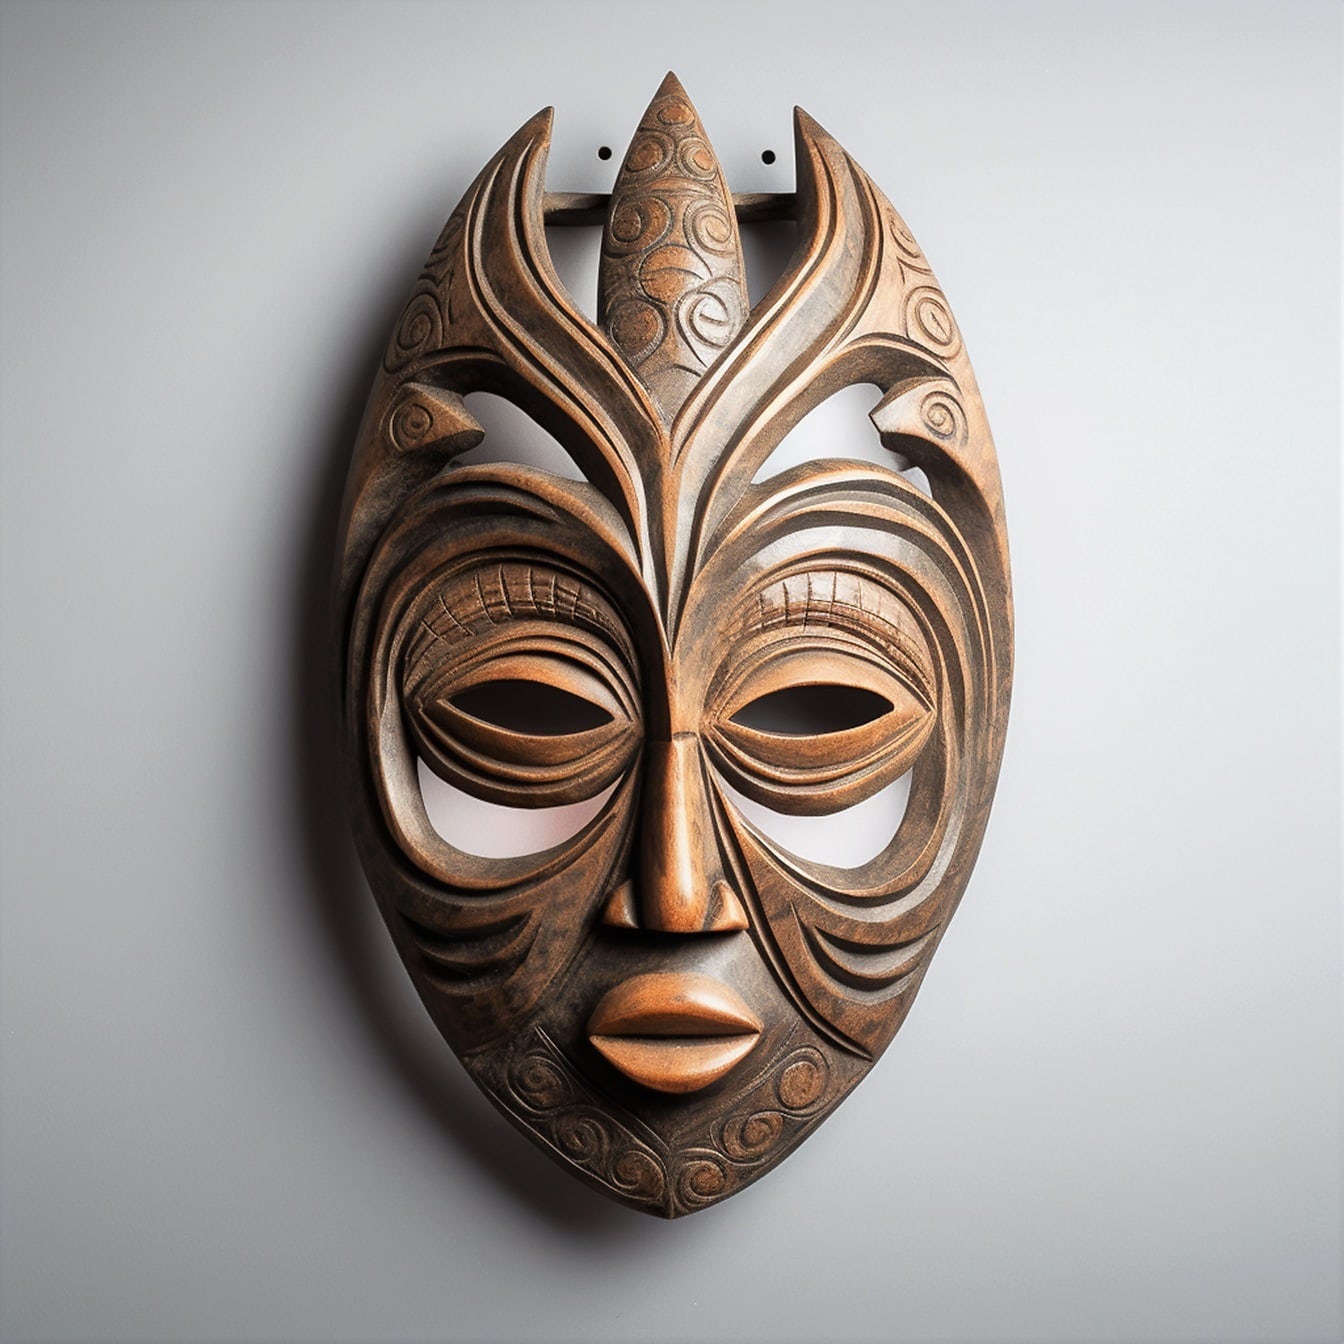 Hardwood handmade African style face mask close-up